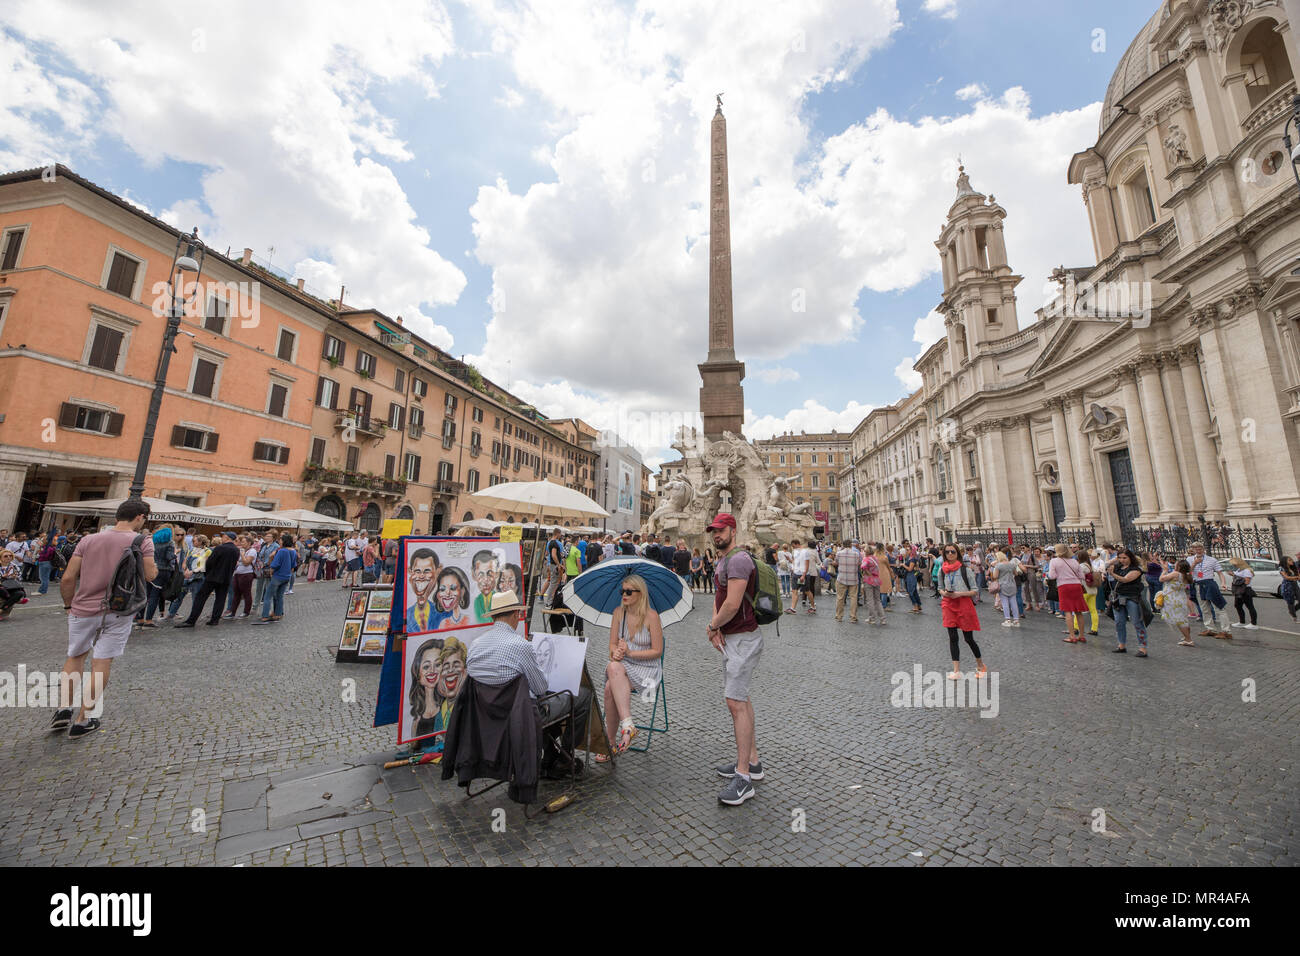 Rome Italy, Piazza della Rotonda, Pantheon, tourists visiting the capital city monuments Stock Photo